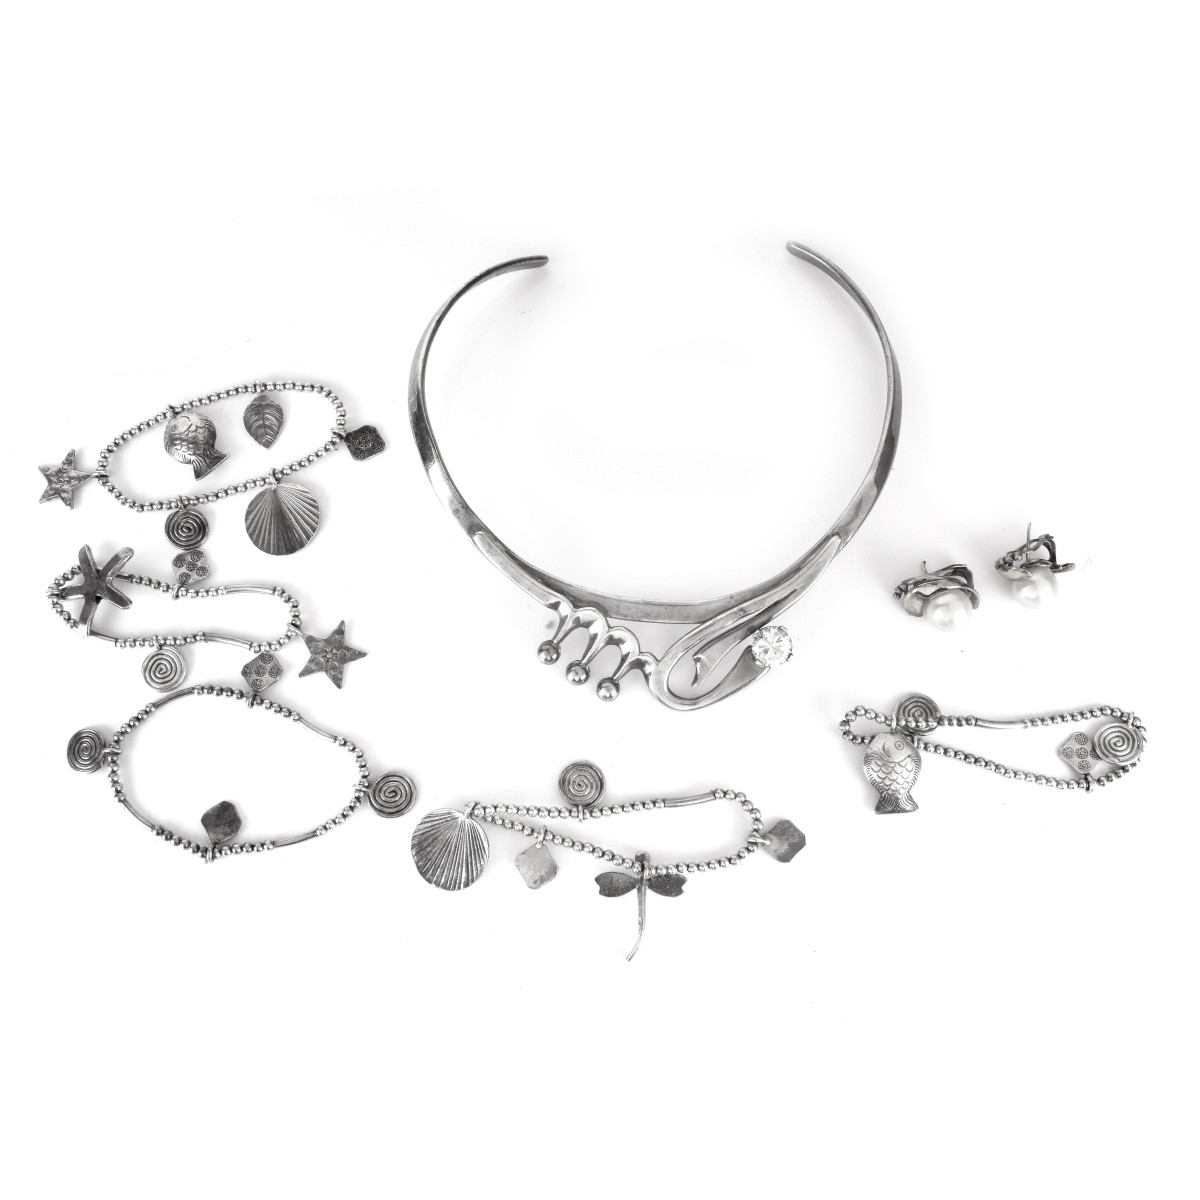 Silver Jewelry Lot